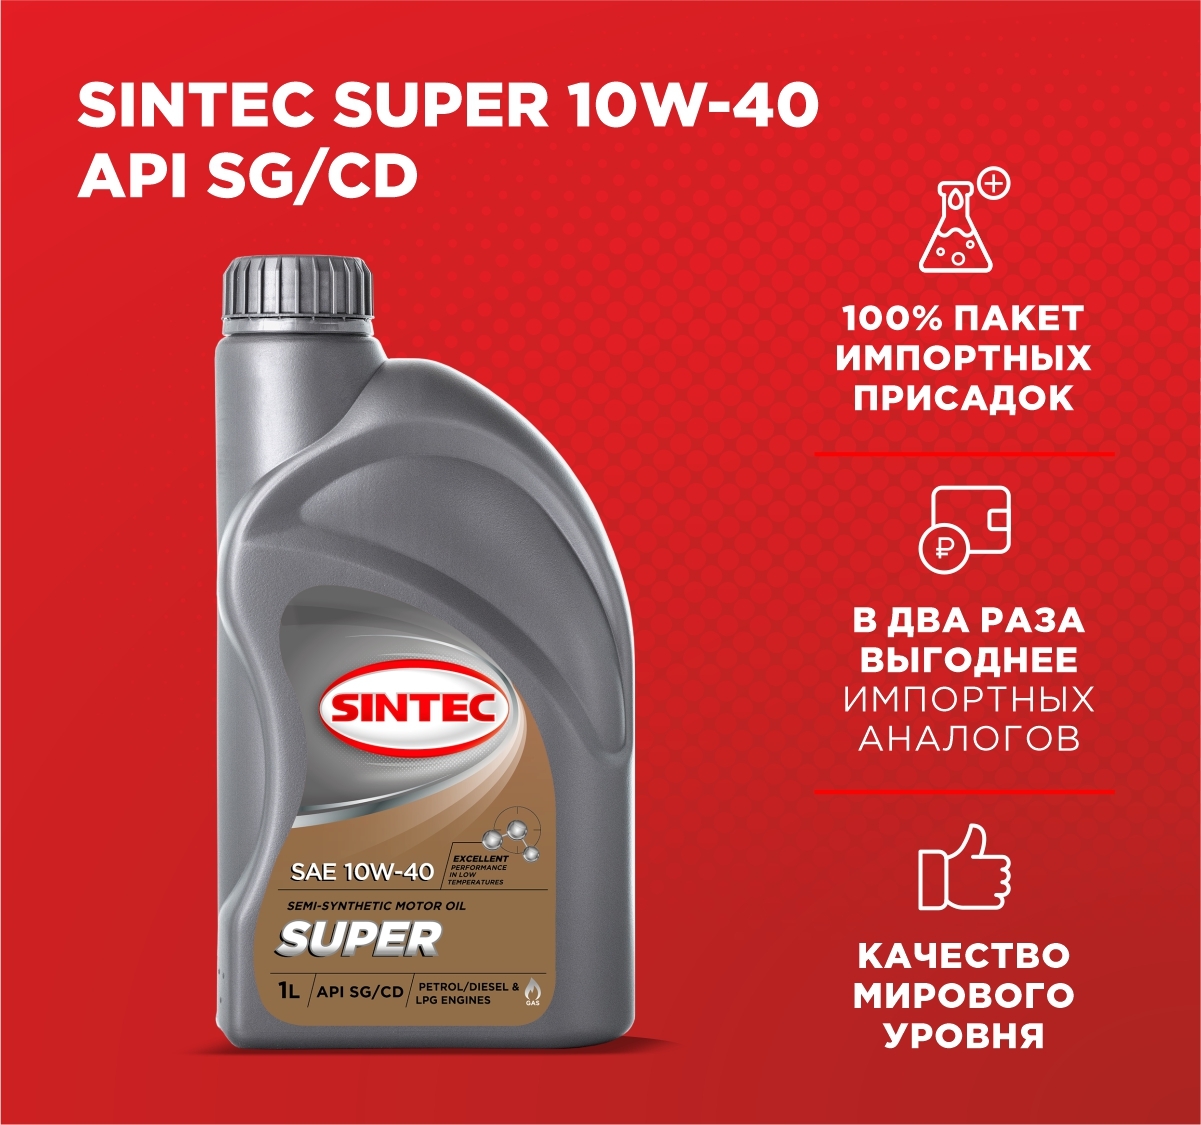 Sintec super 10w-40 SAE API SG. Синтек супер 10w 40 1 лит артикул. Полусинтетическое моторное масло sintec